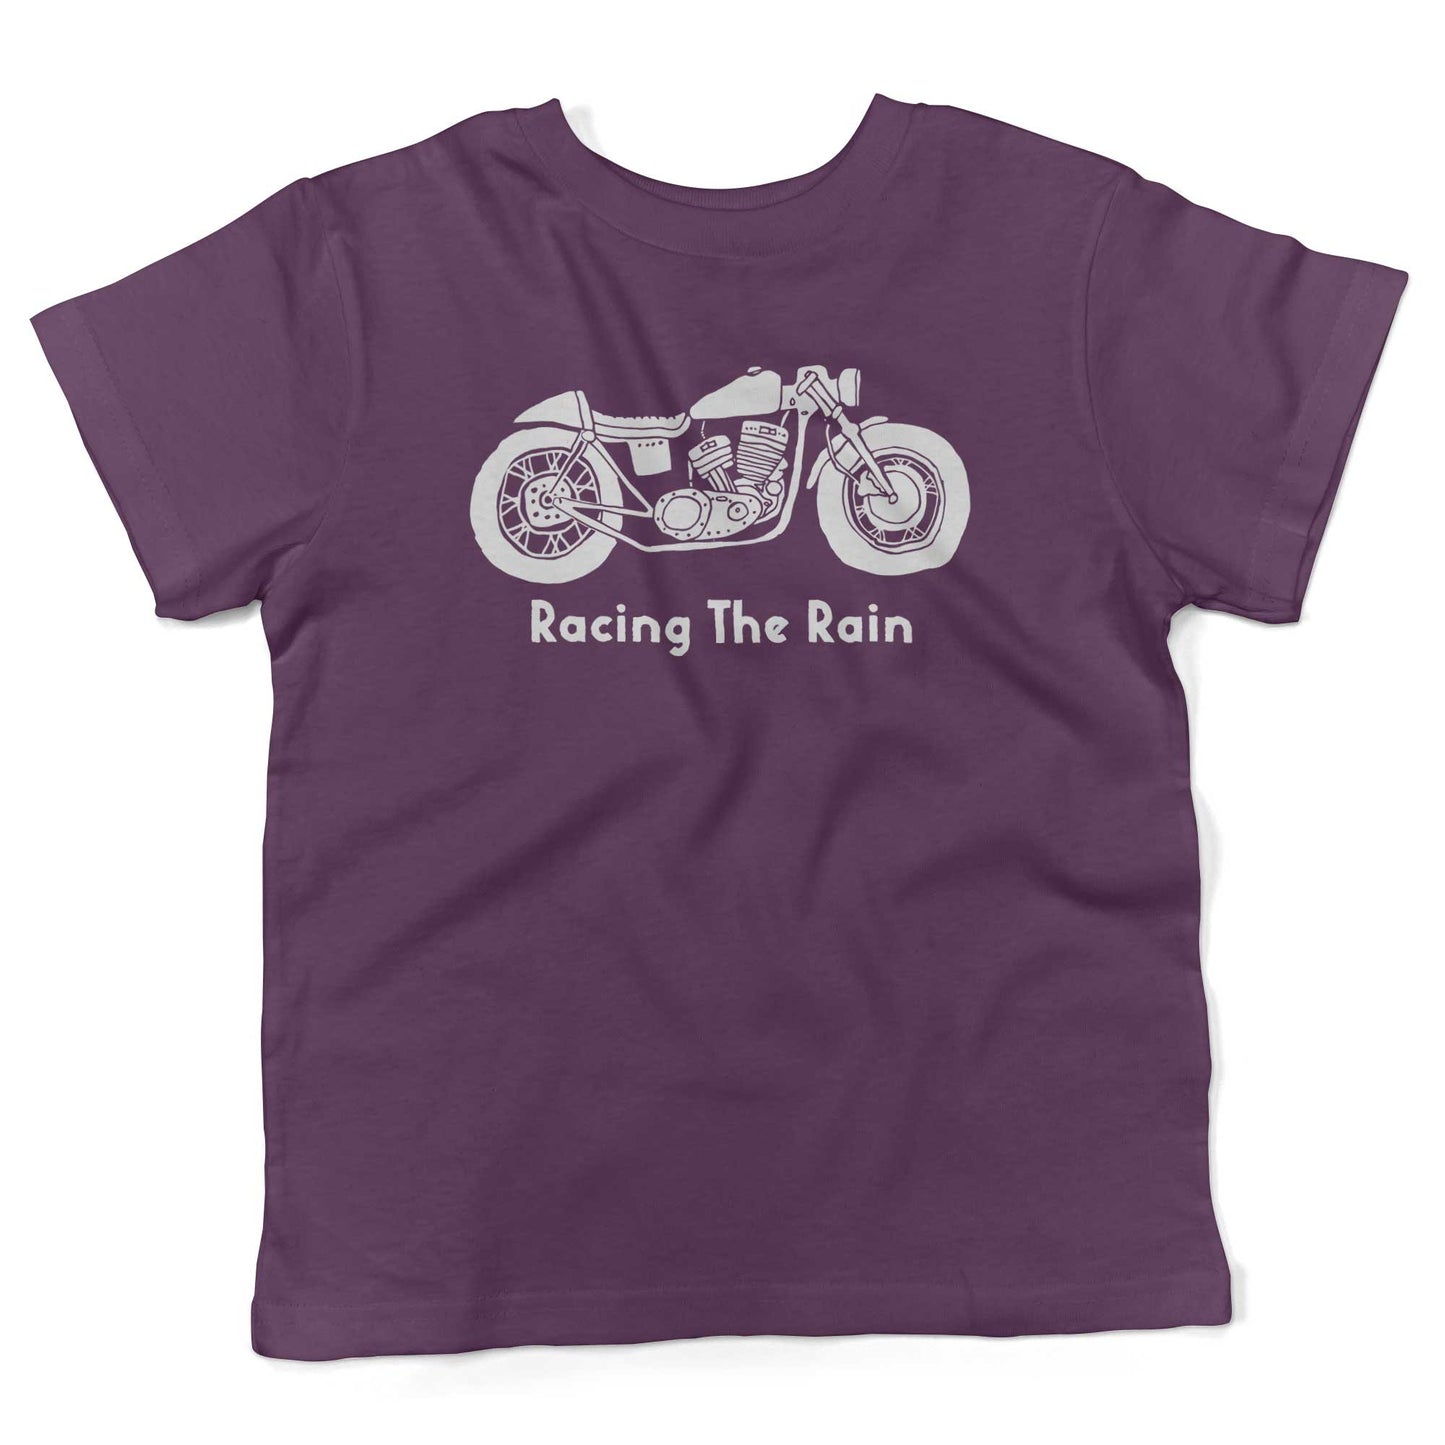 Racing The Rain Toddler Shirt-Organic Purple-2T